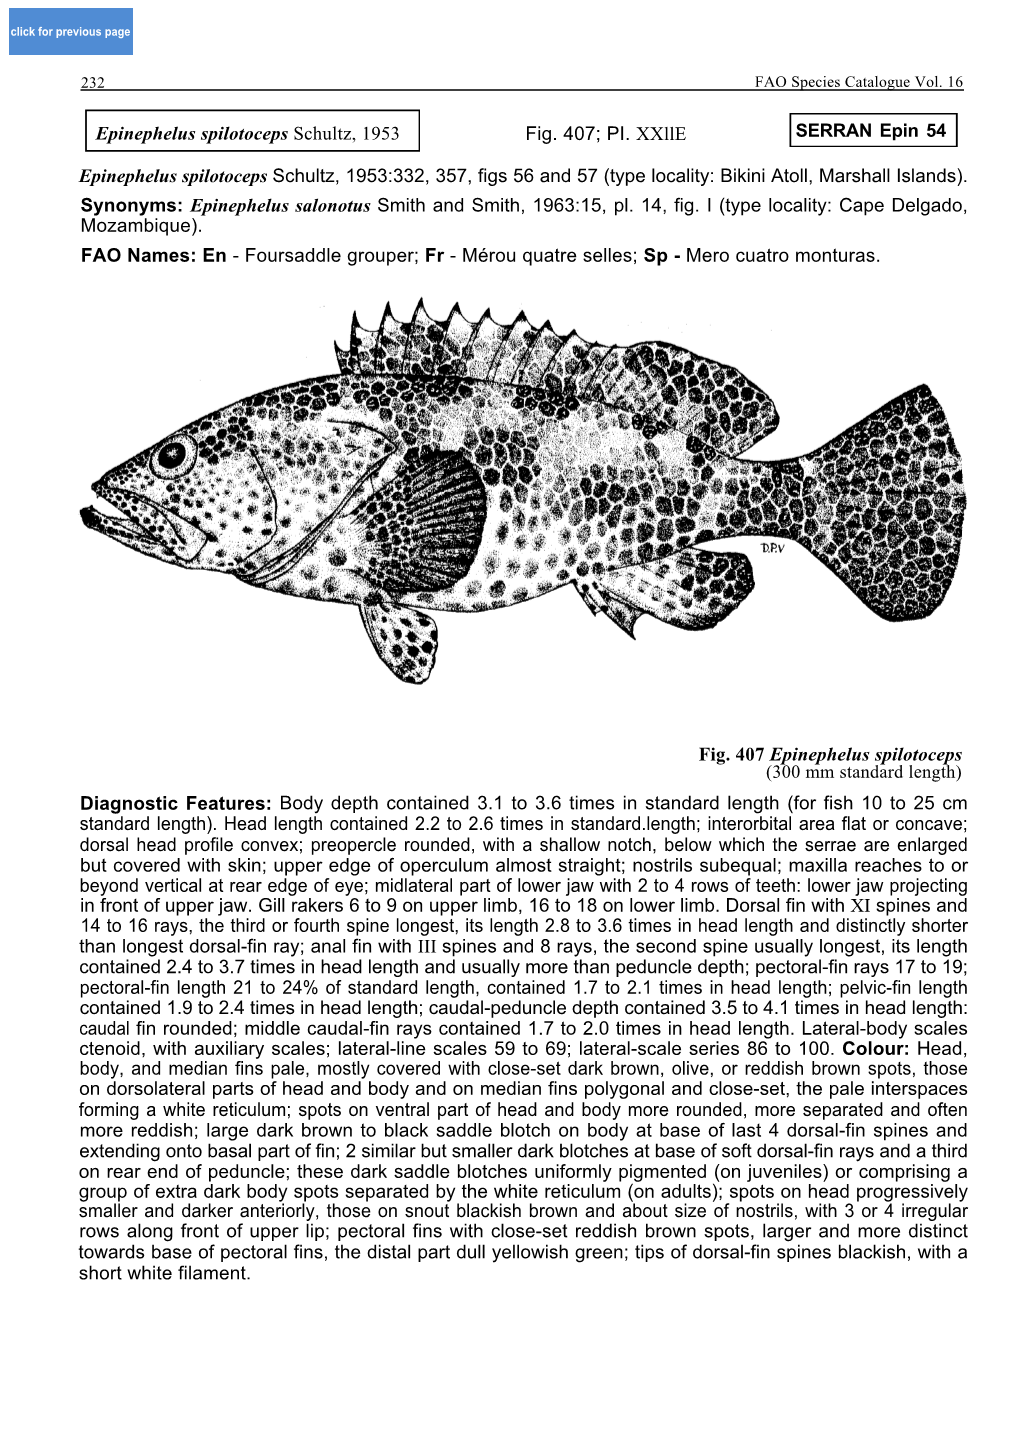 Epinephelus Spilotoceps Schultz, 1953:332, 357, Figs 56 and 57 (Type Locality: Bikini Atoll, Marshall Islands)